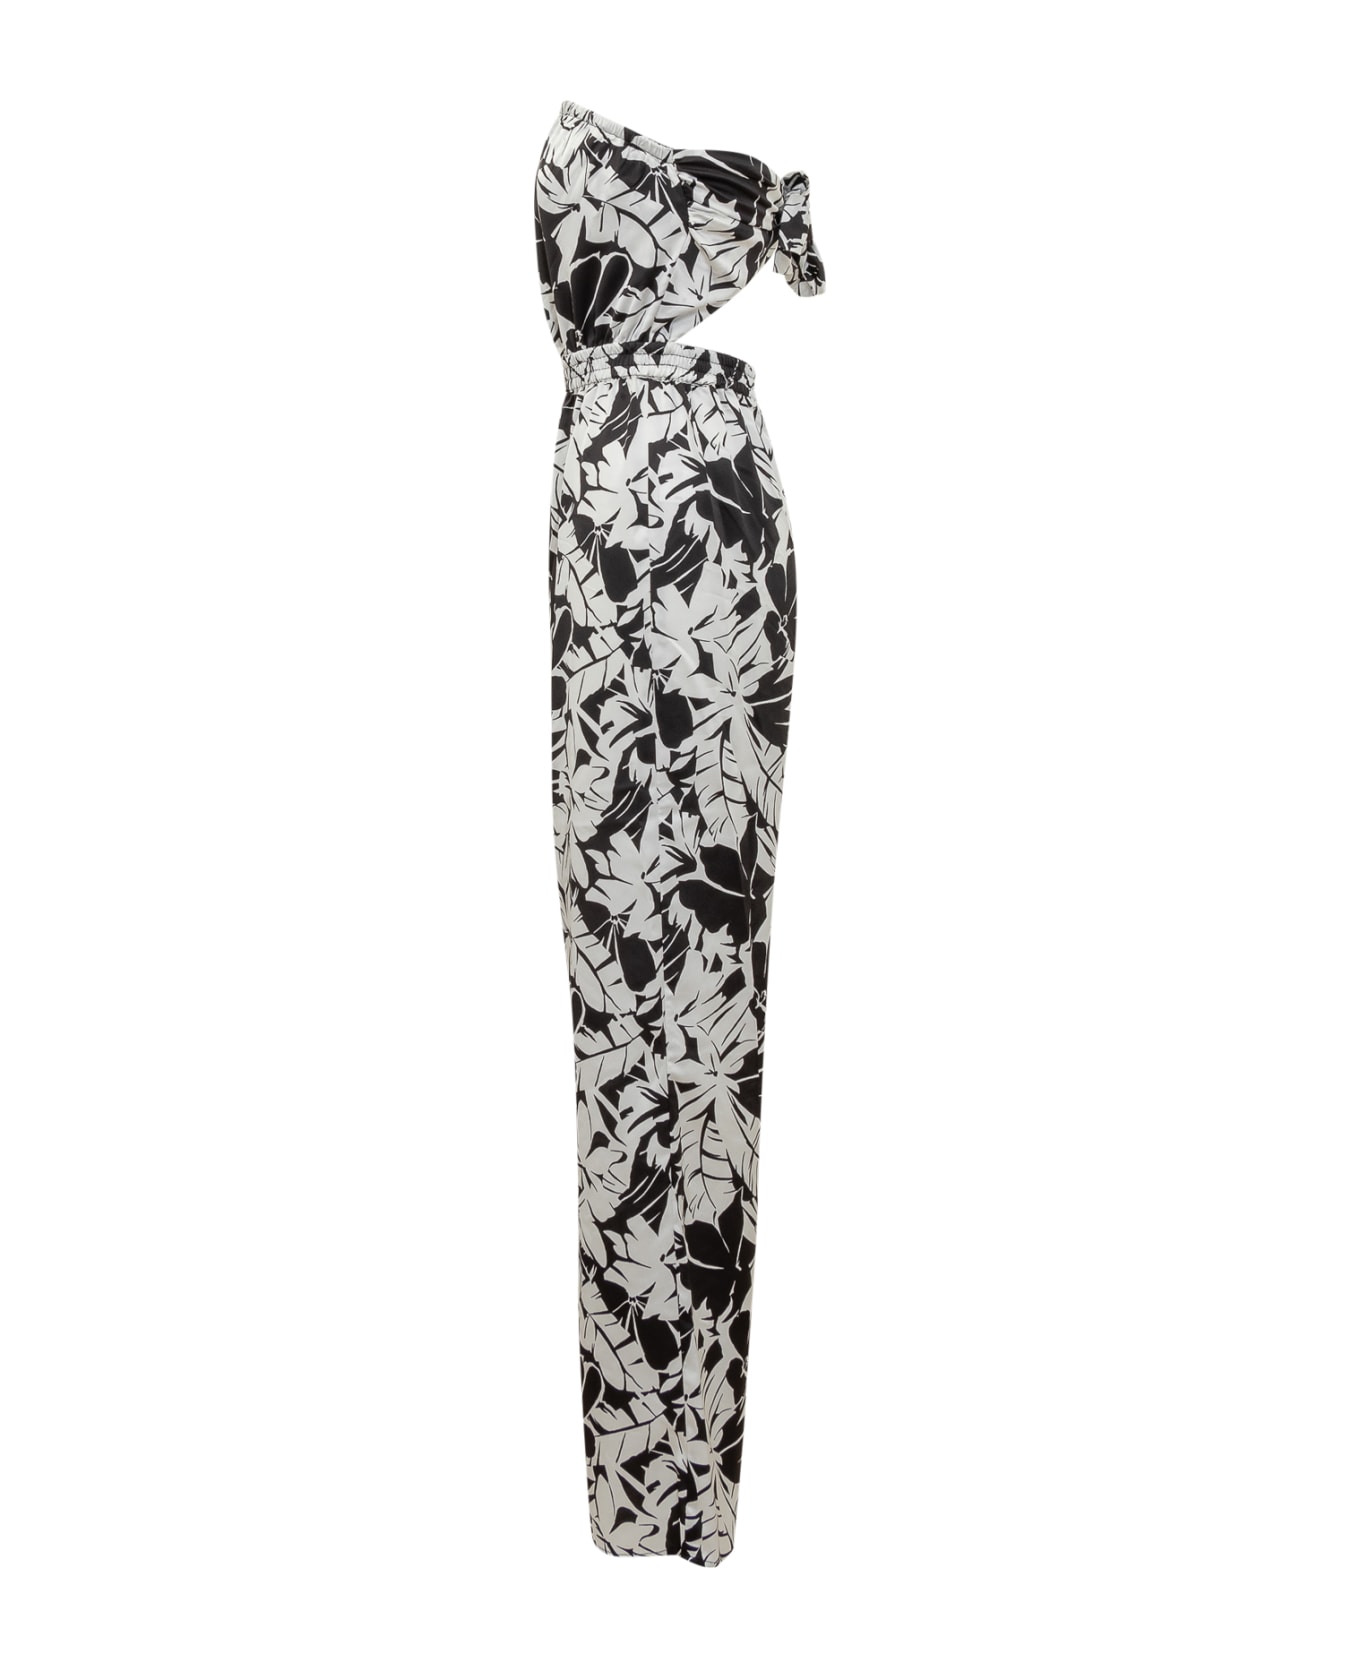 Michael Kors Palm Tie Jumpsuit - Black White ジャンプスーツ